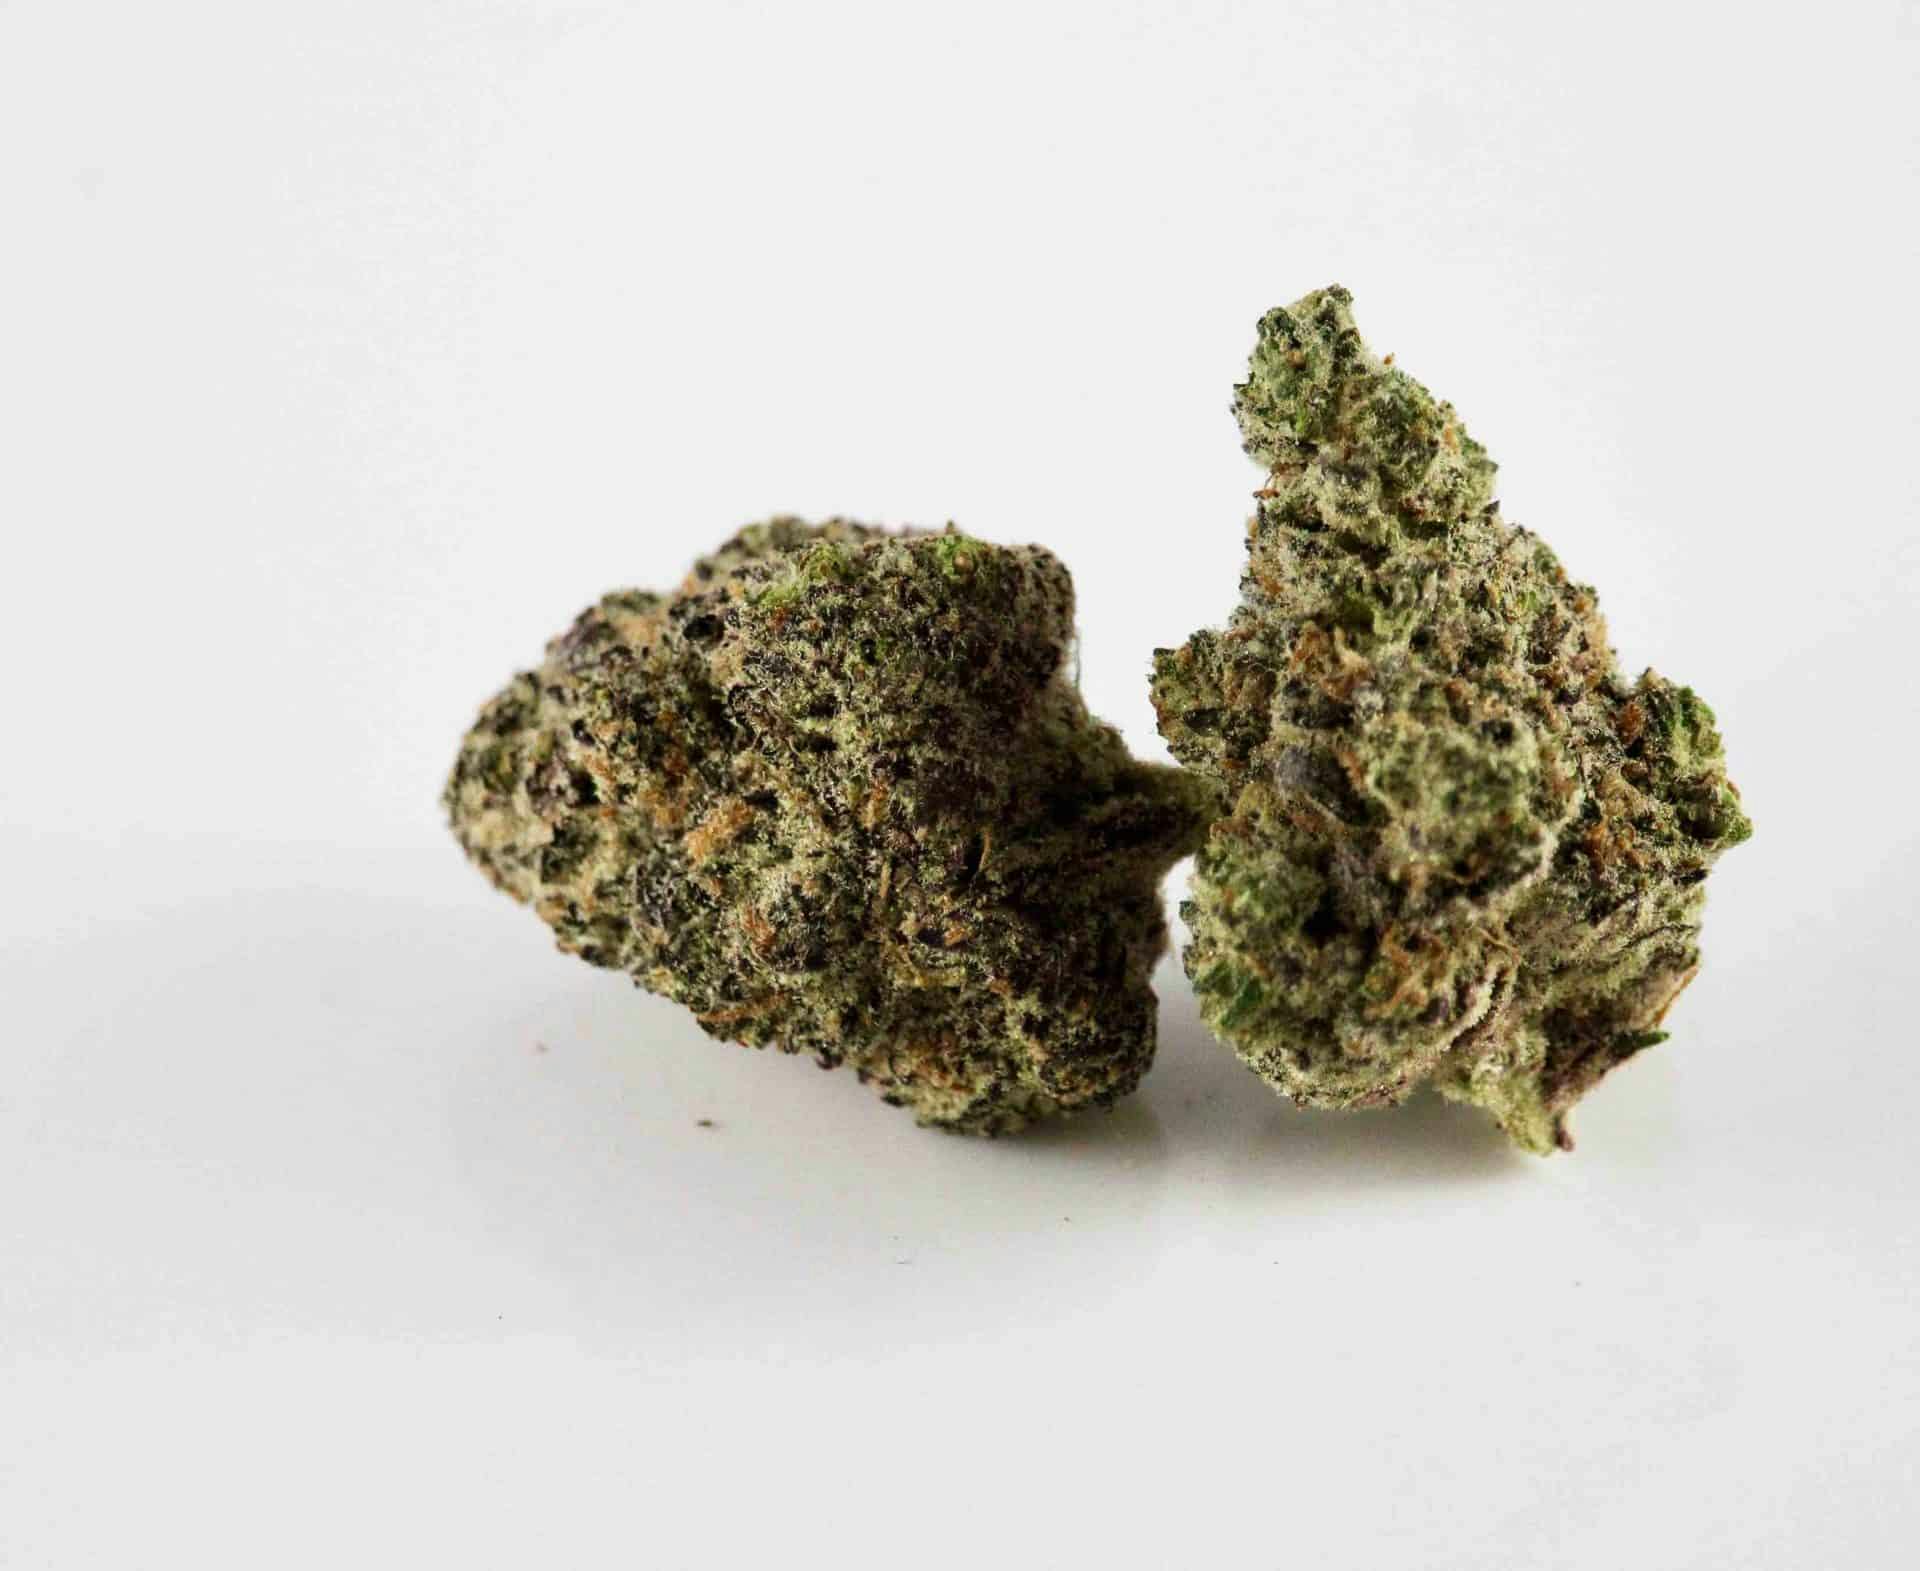 dried cannabis buds